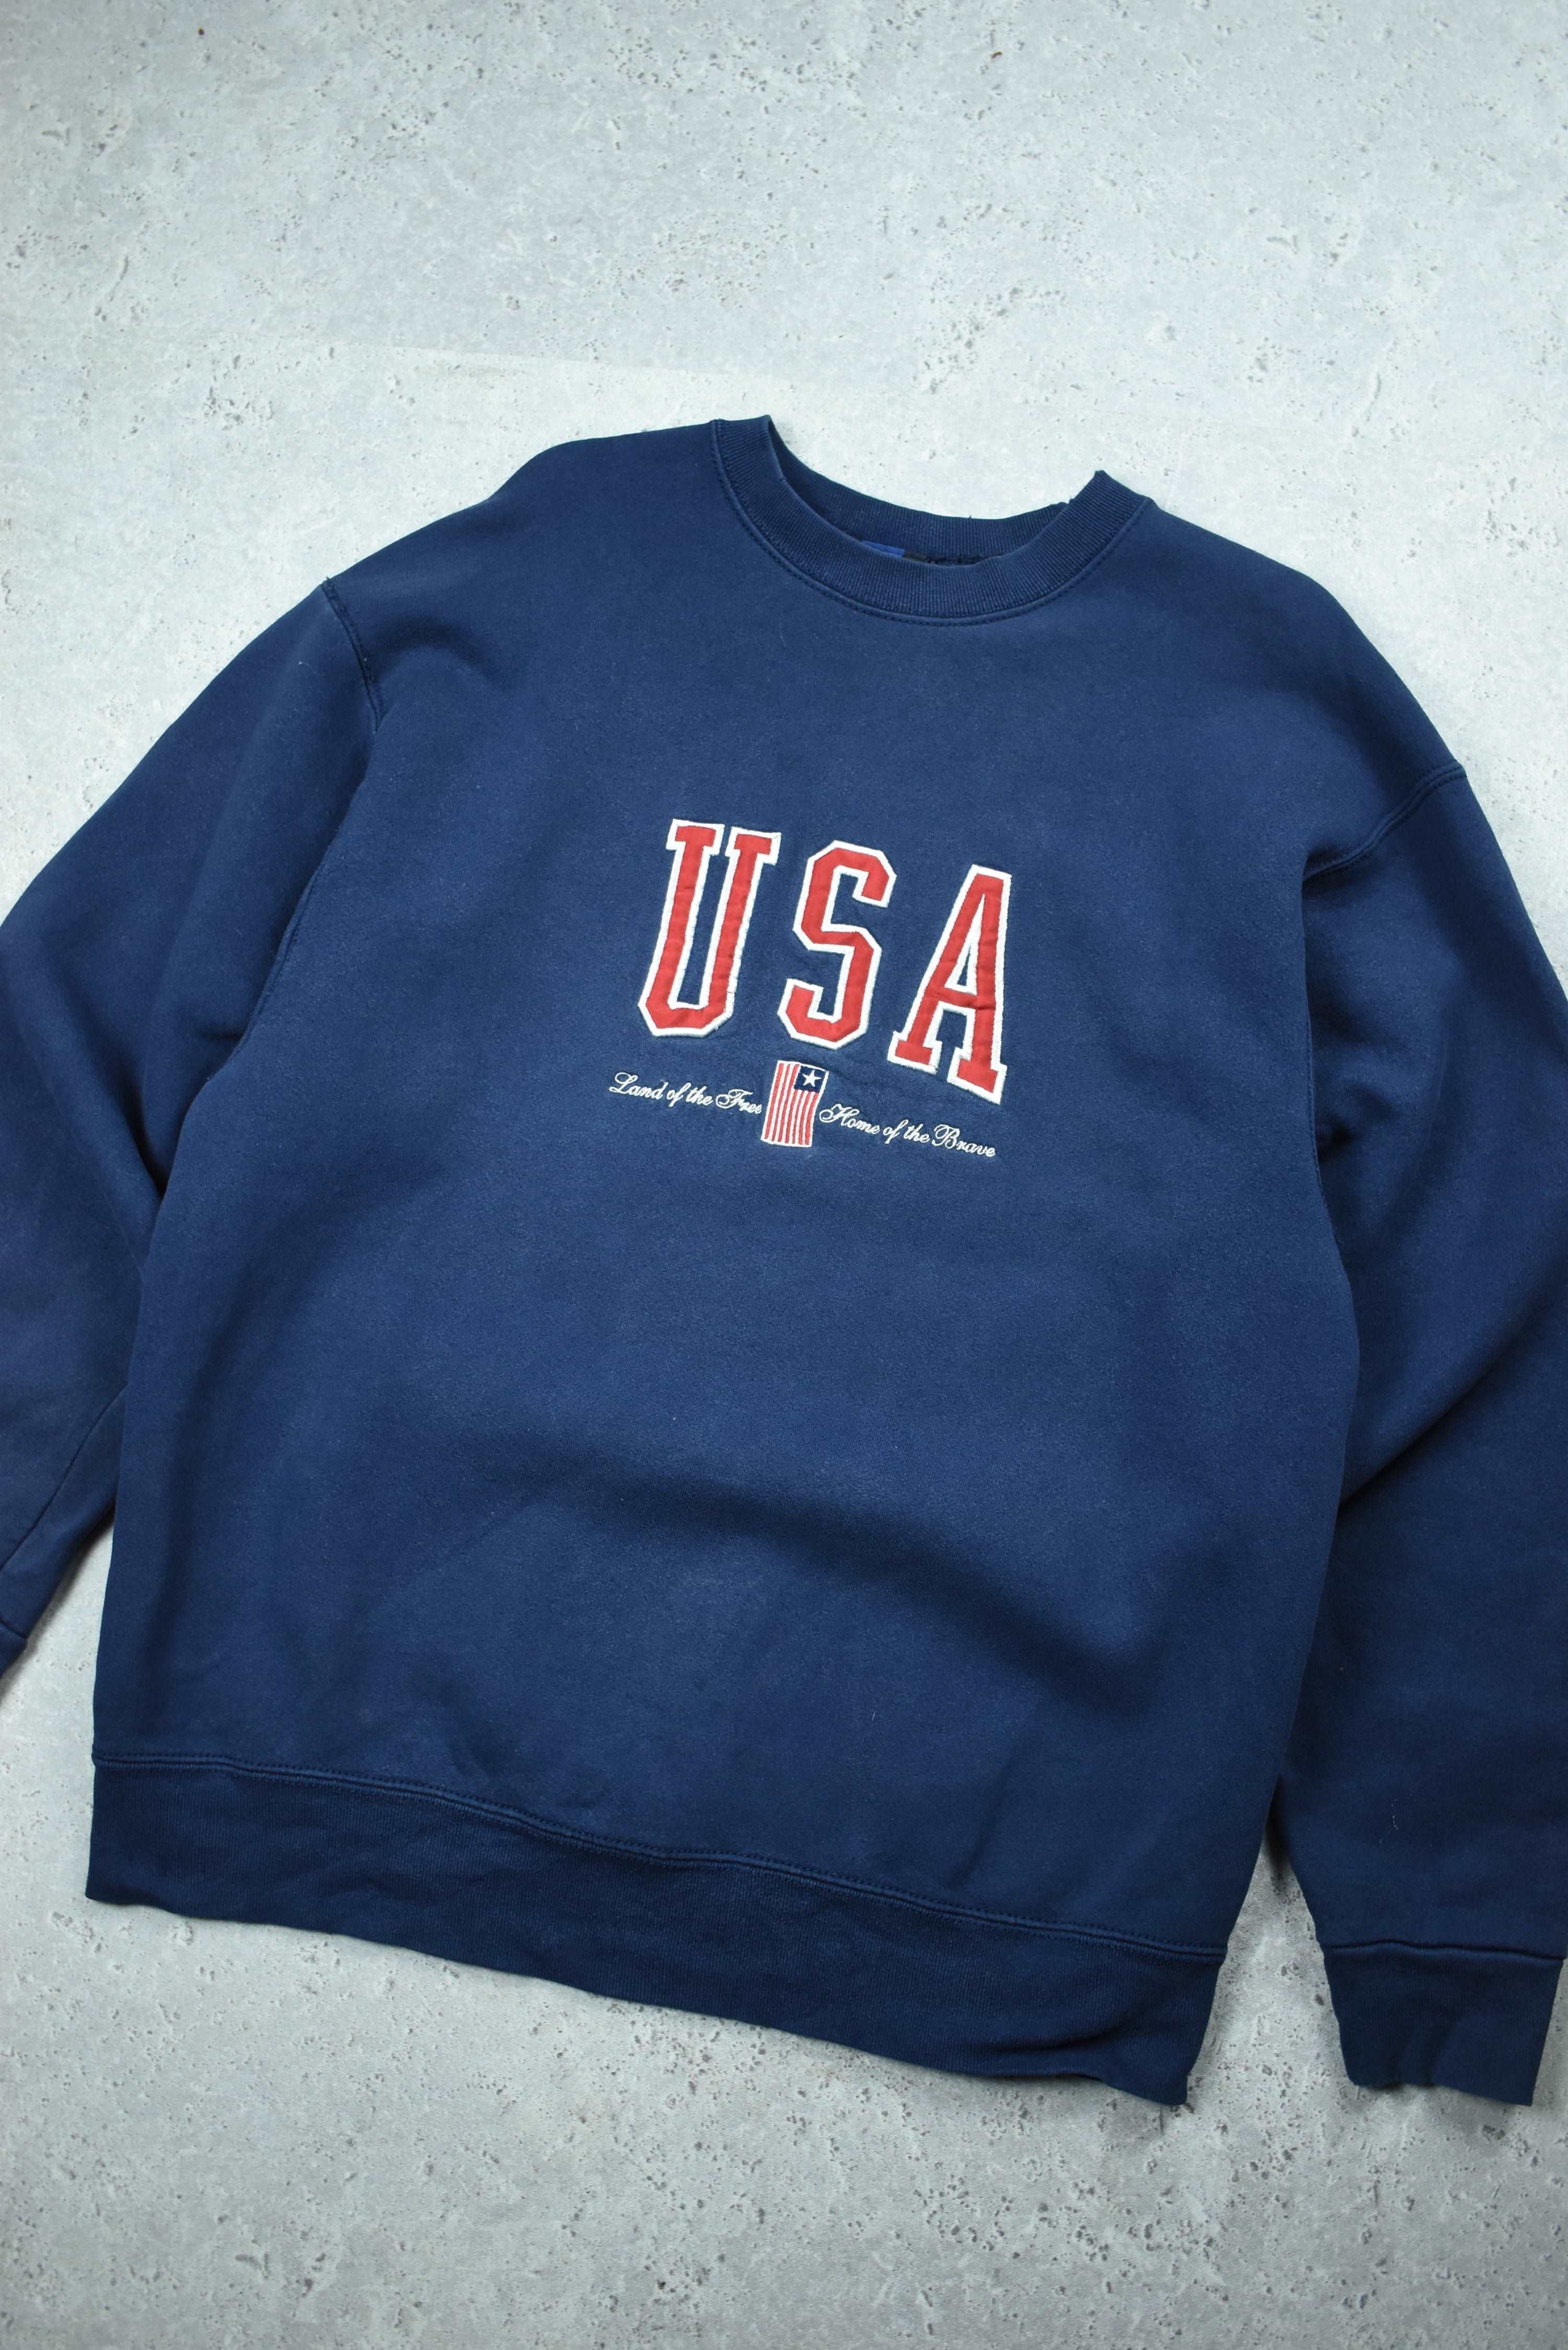 Vintage Cambridge Classic Embroidered USA Sweatshirt Large